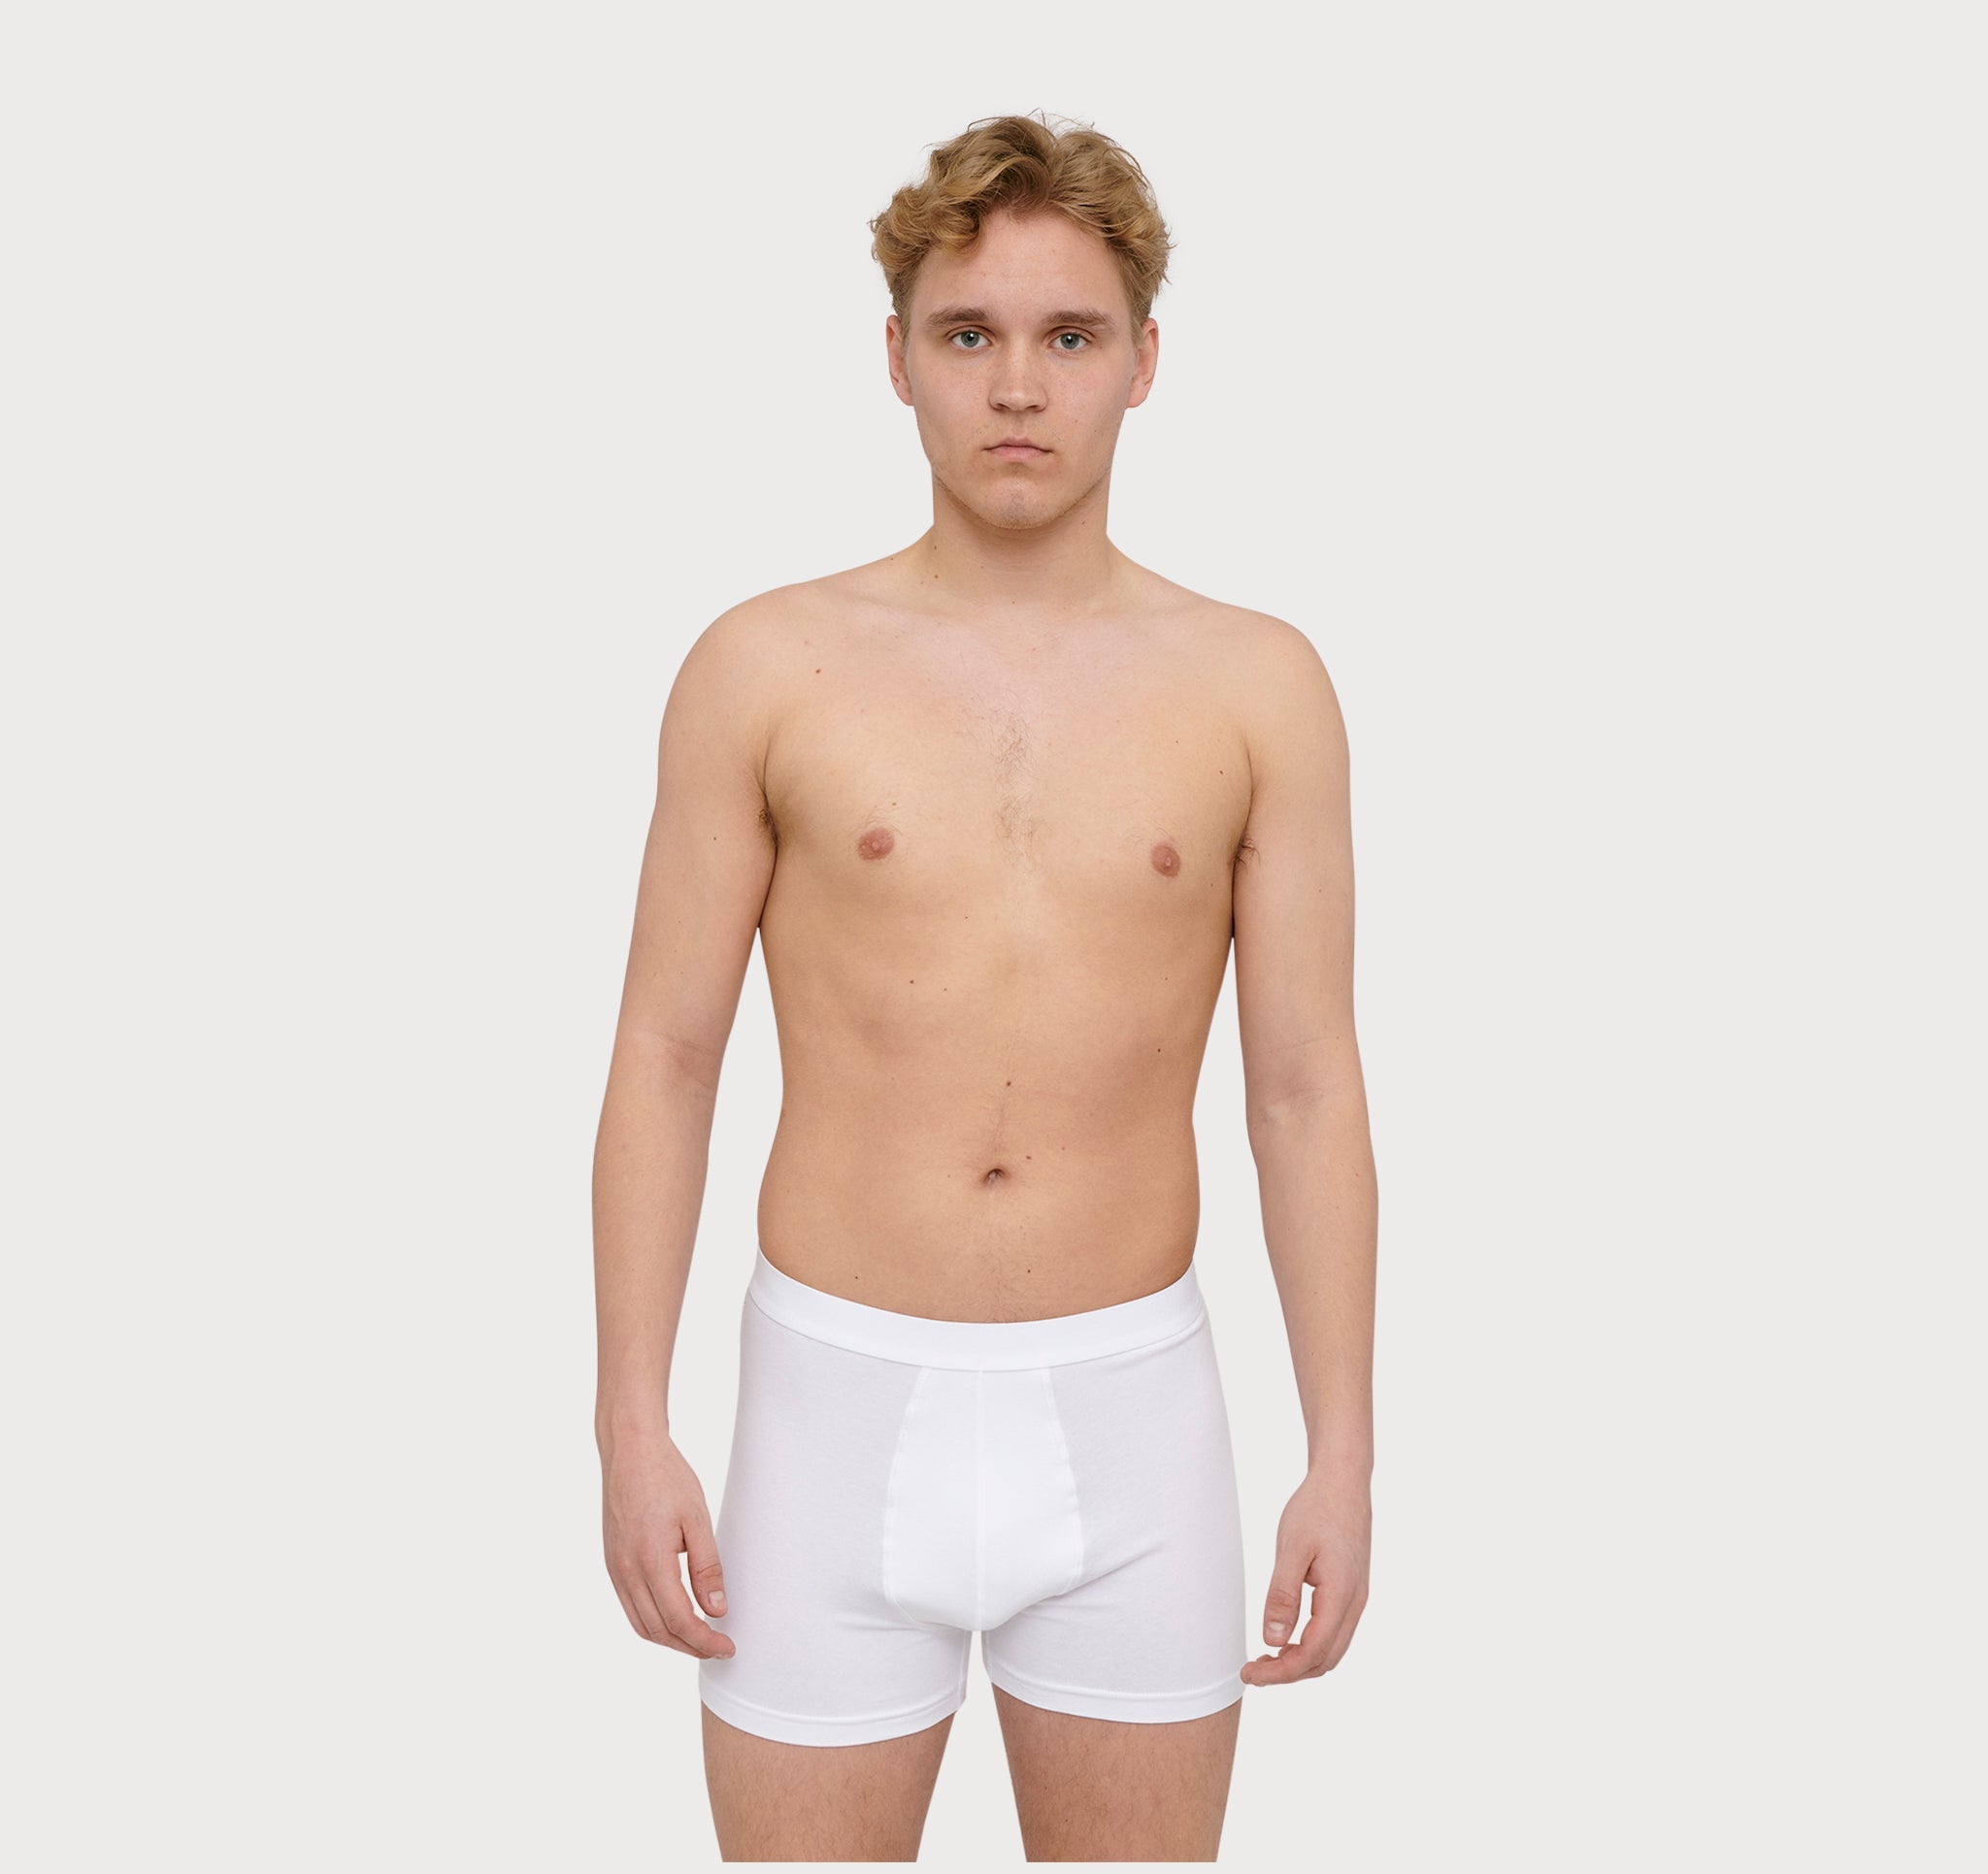 14 Men's Underwear Brands for Low Impact and High Comfort